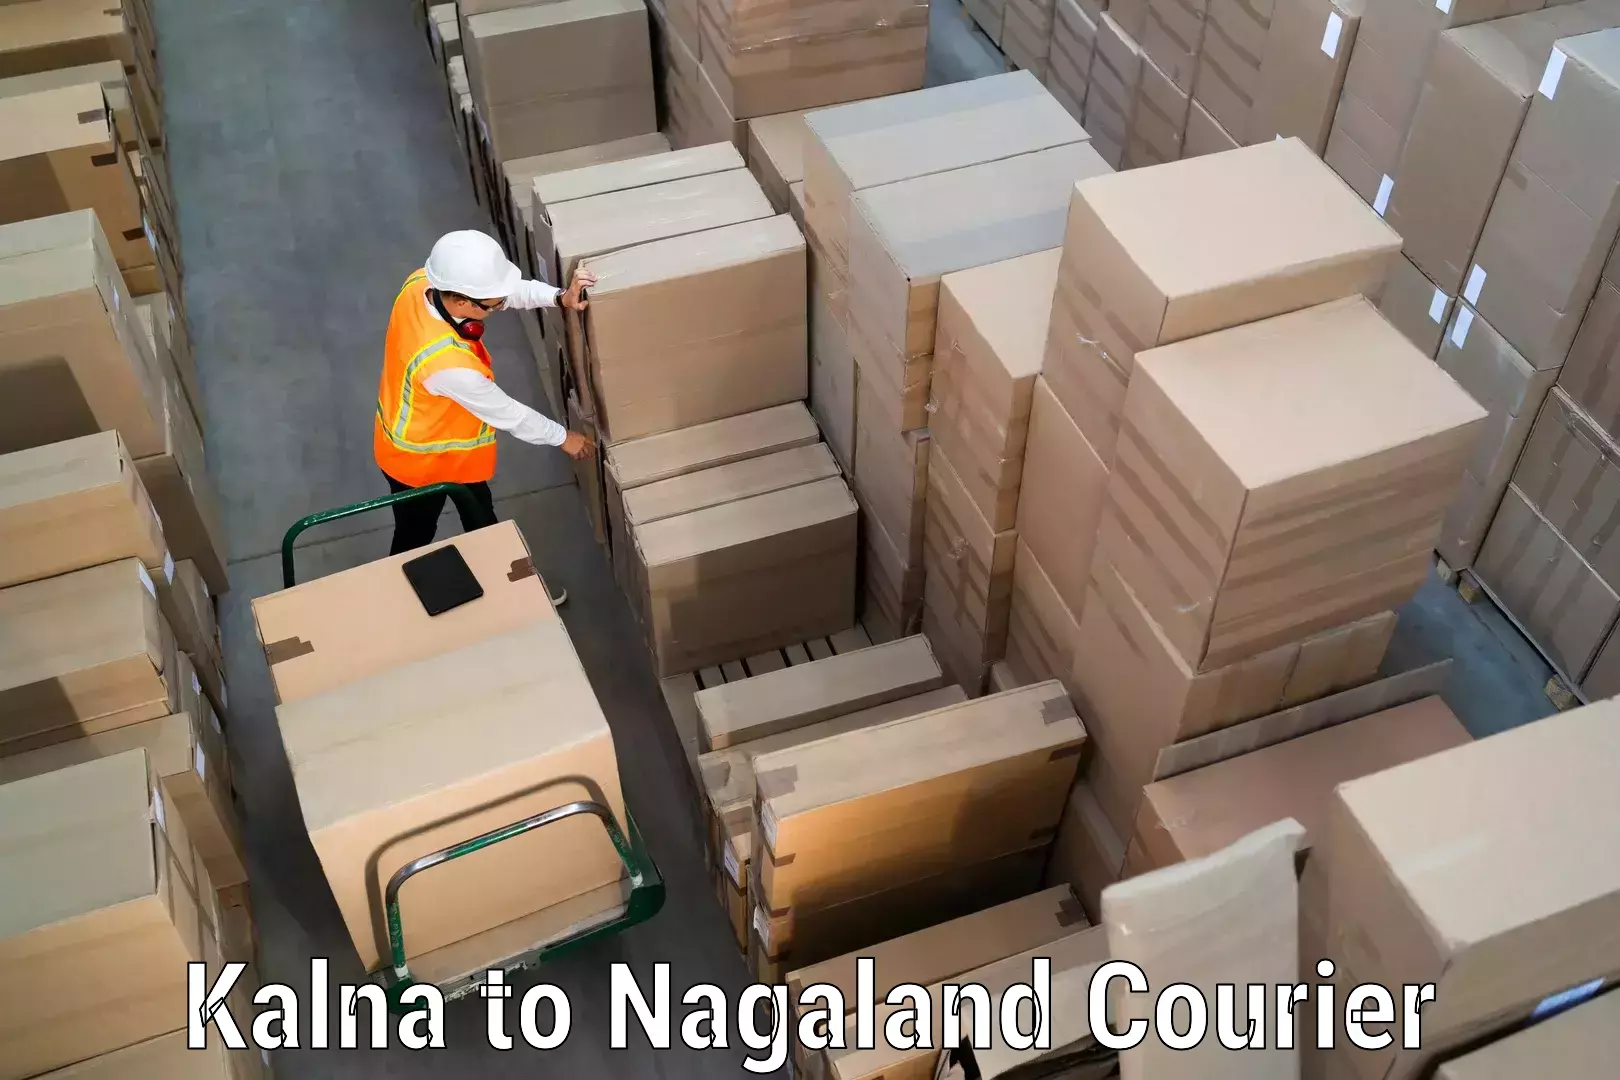 Efficient order fulfillment Kalna to Nagaland